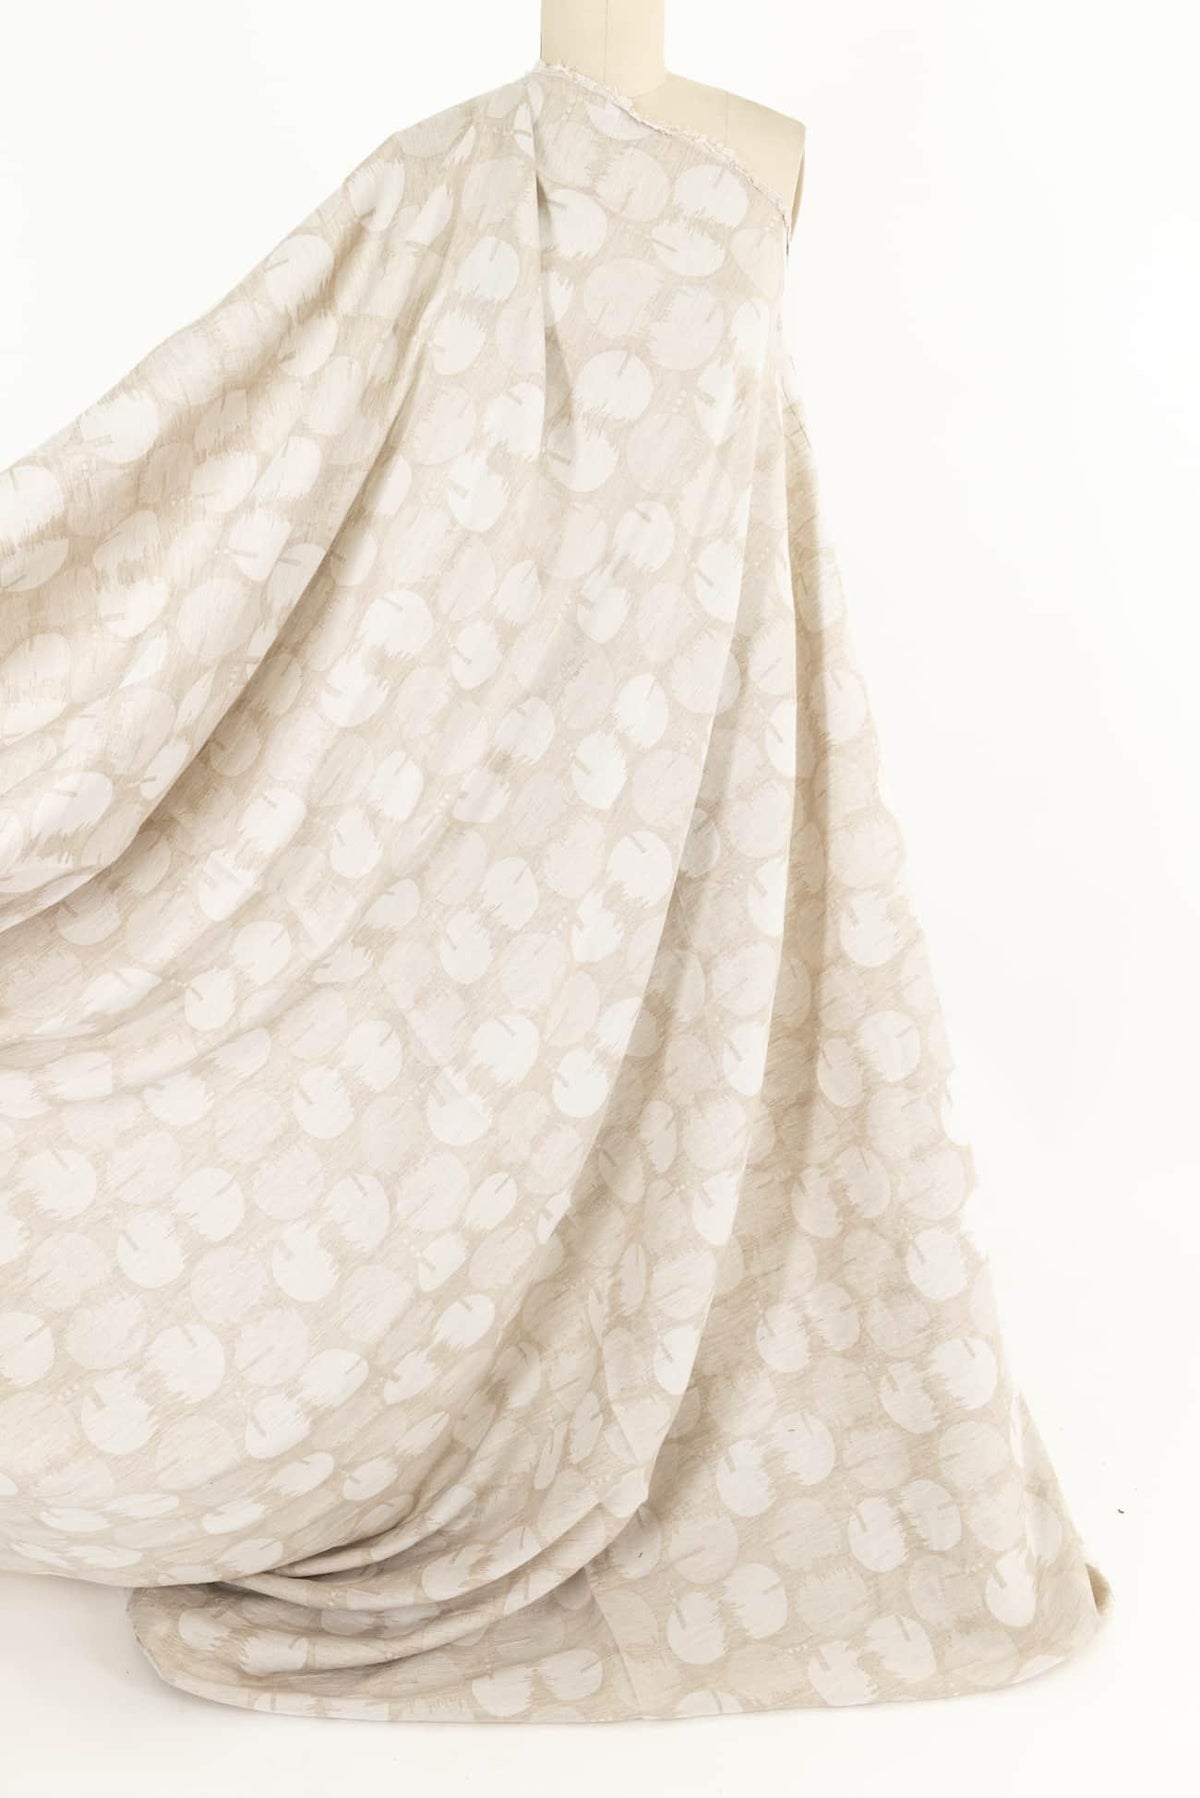 Sand Hills Linen Blend Jacquard Woven - Marcy Tilton Fabrics